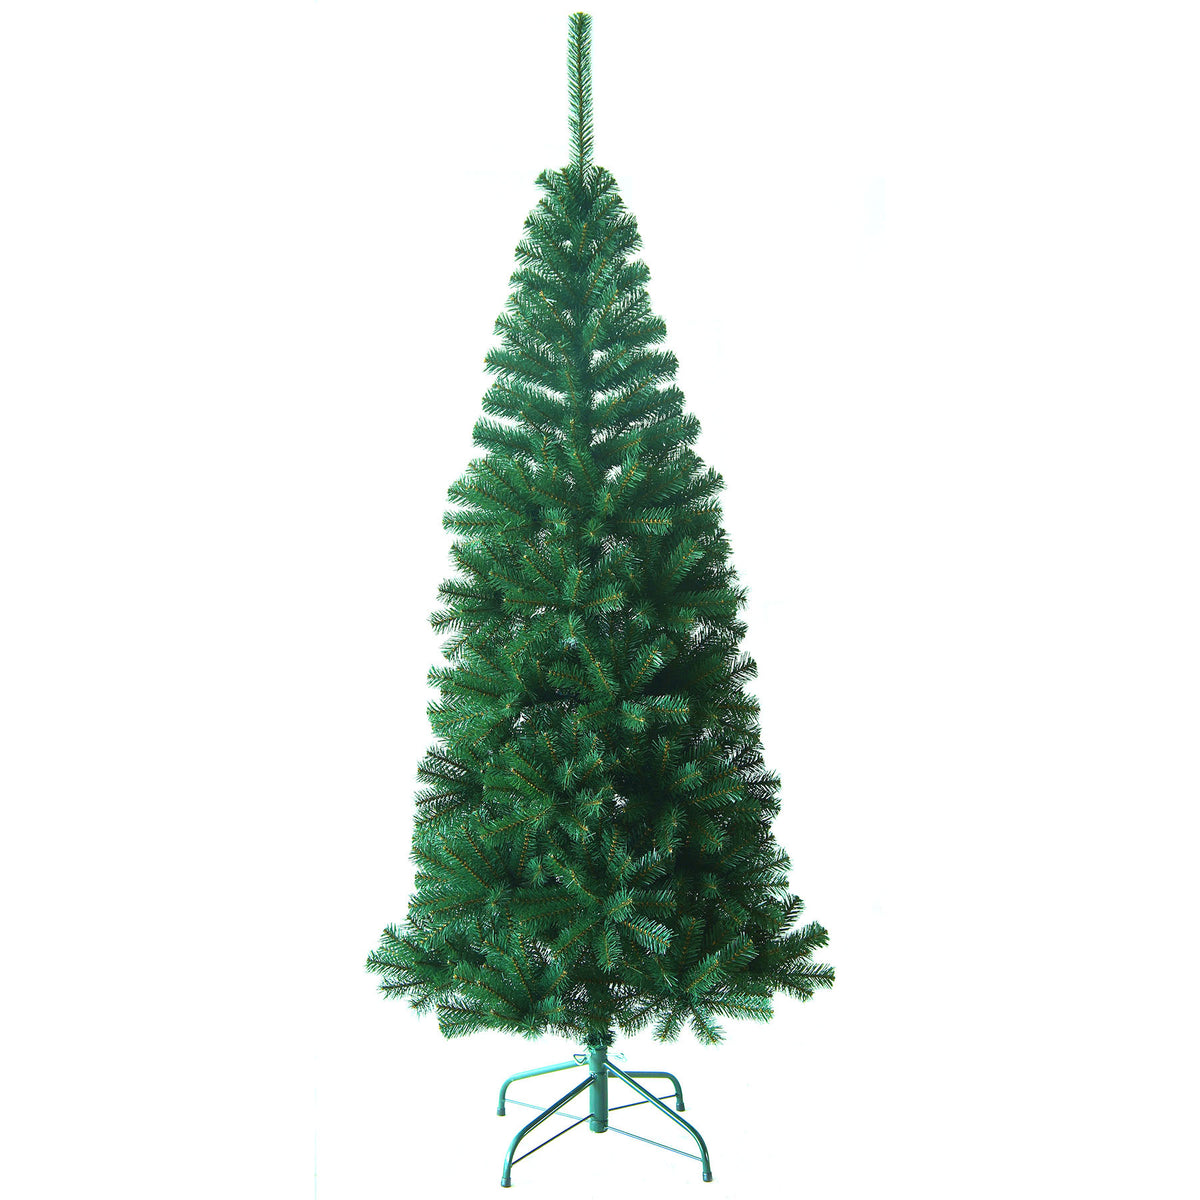 Noma Keswick Slim Pine Christmas Tree with 1050 PVC tips and Metal Stand - 7ft